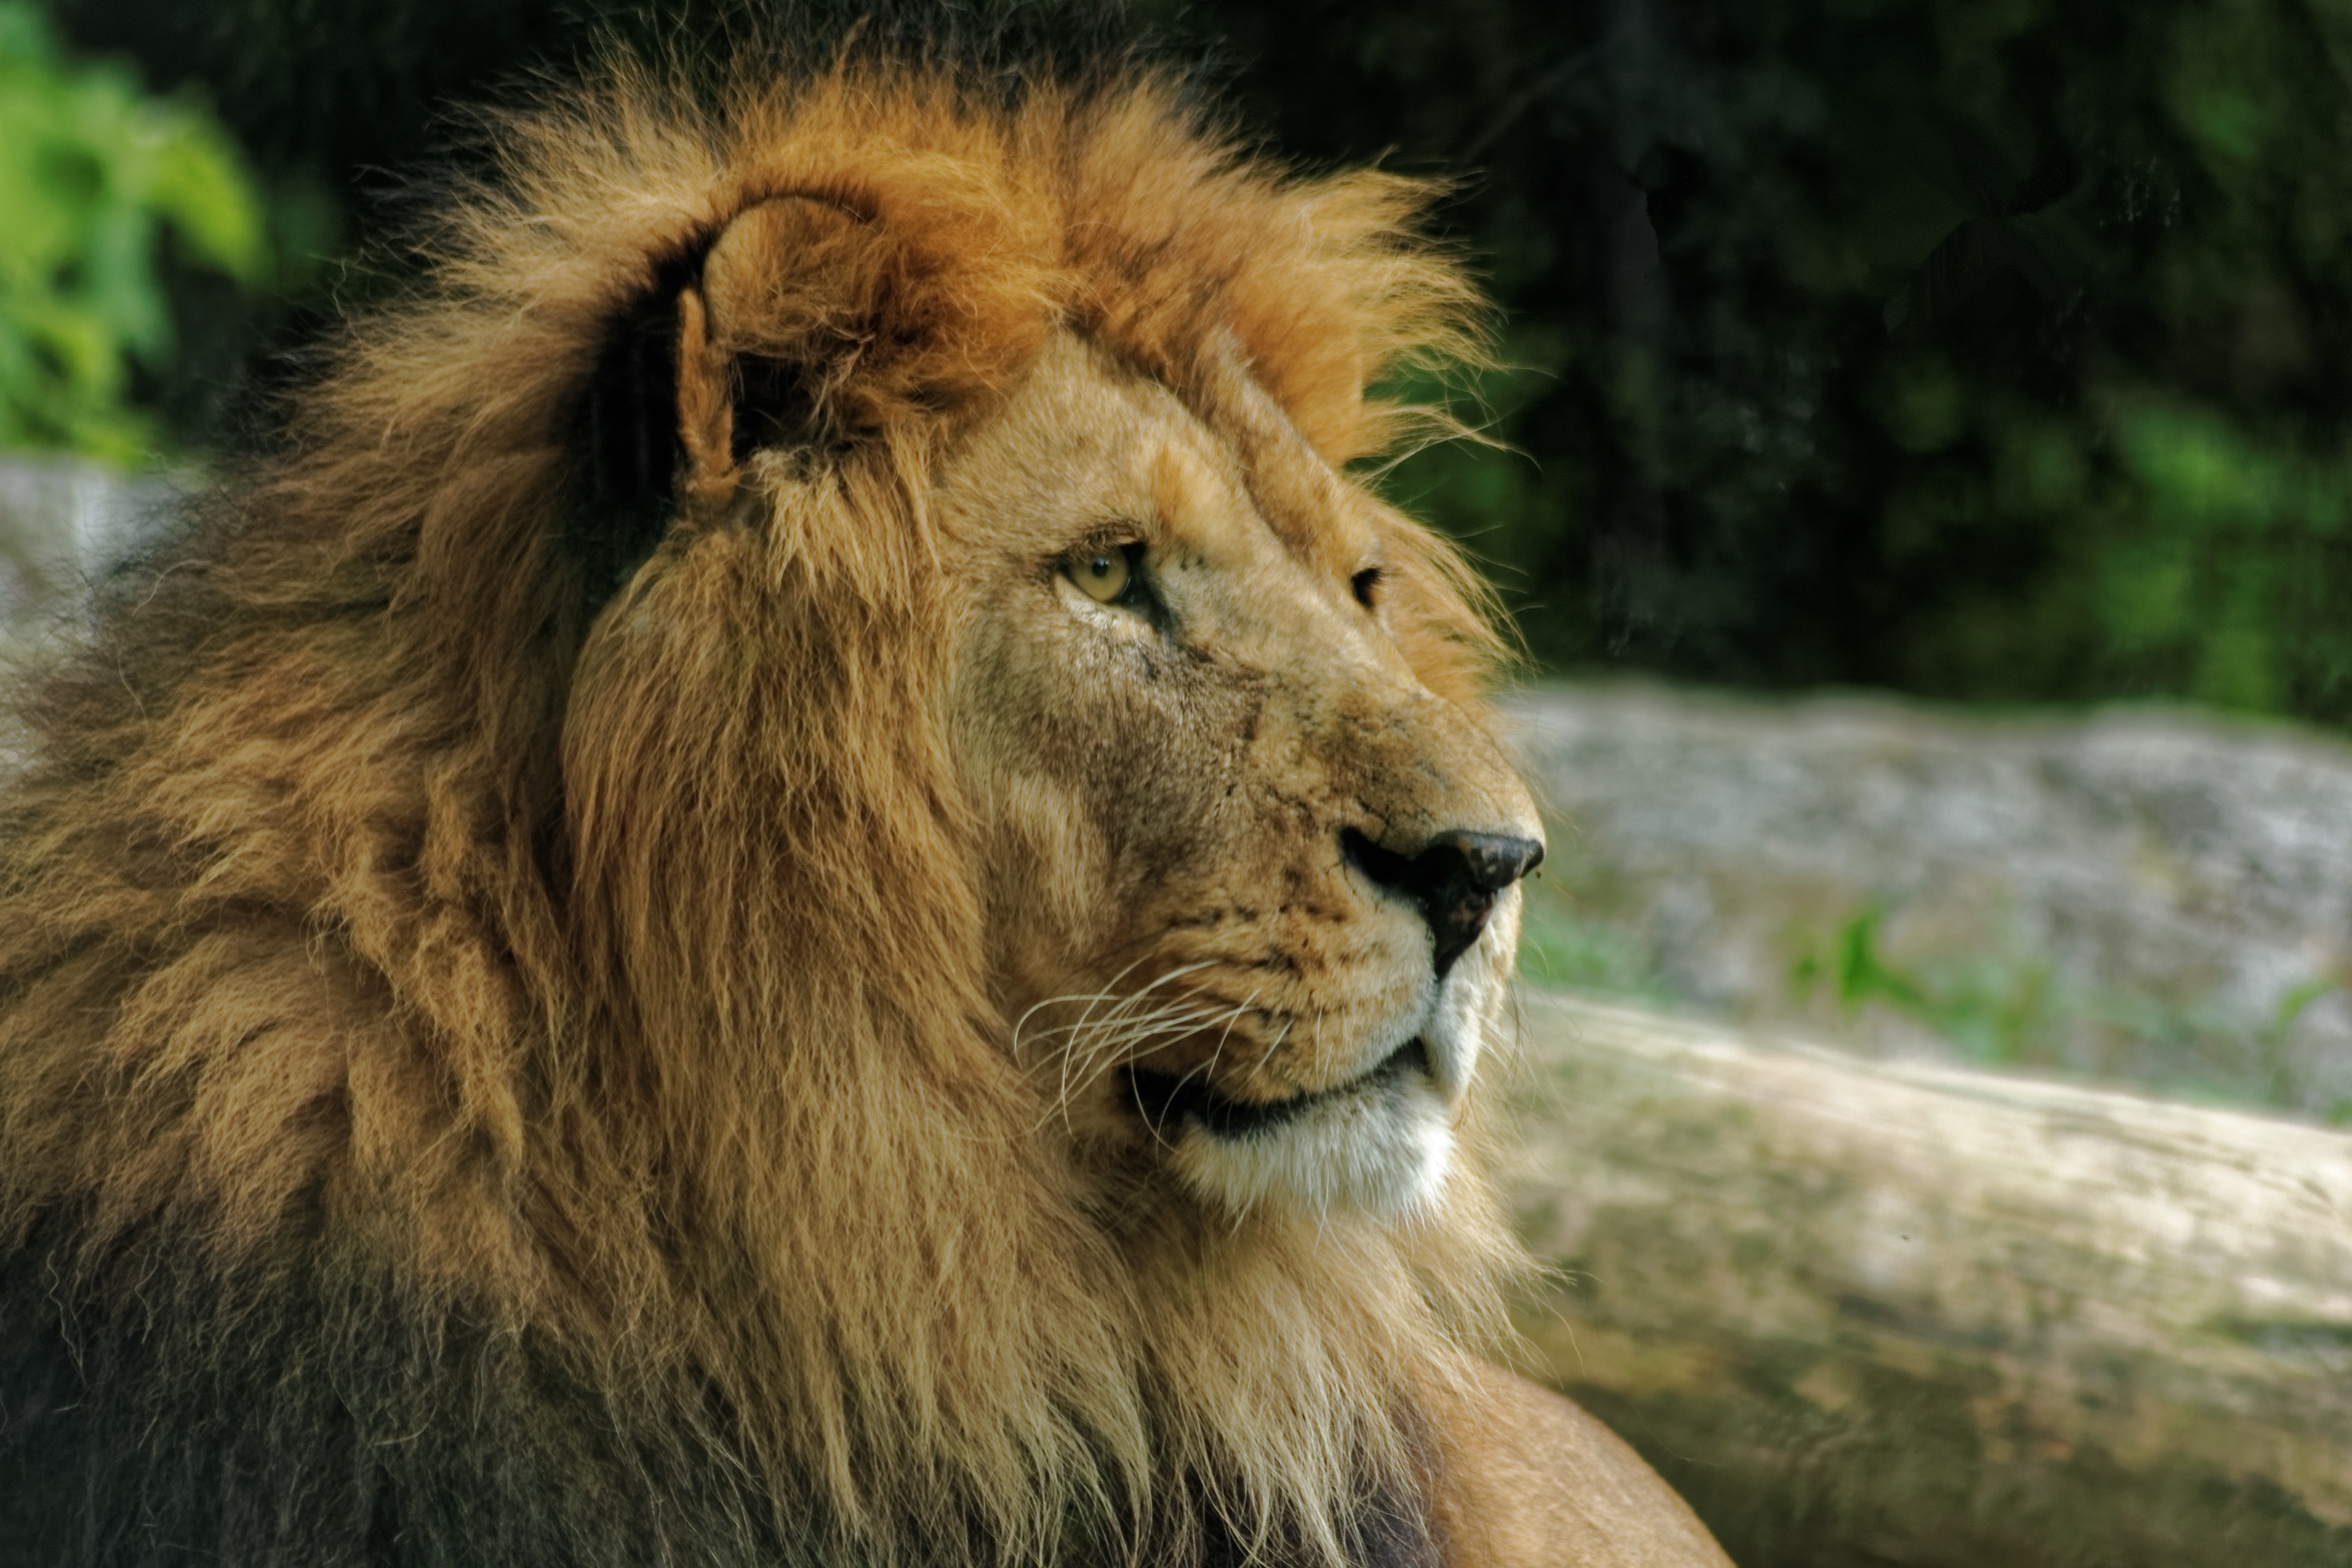 136206 descargar imagen animales, bozal, un leon, león, depredador, melena: fondos de pantalla y protectores de pantalla gratis